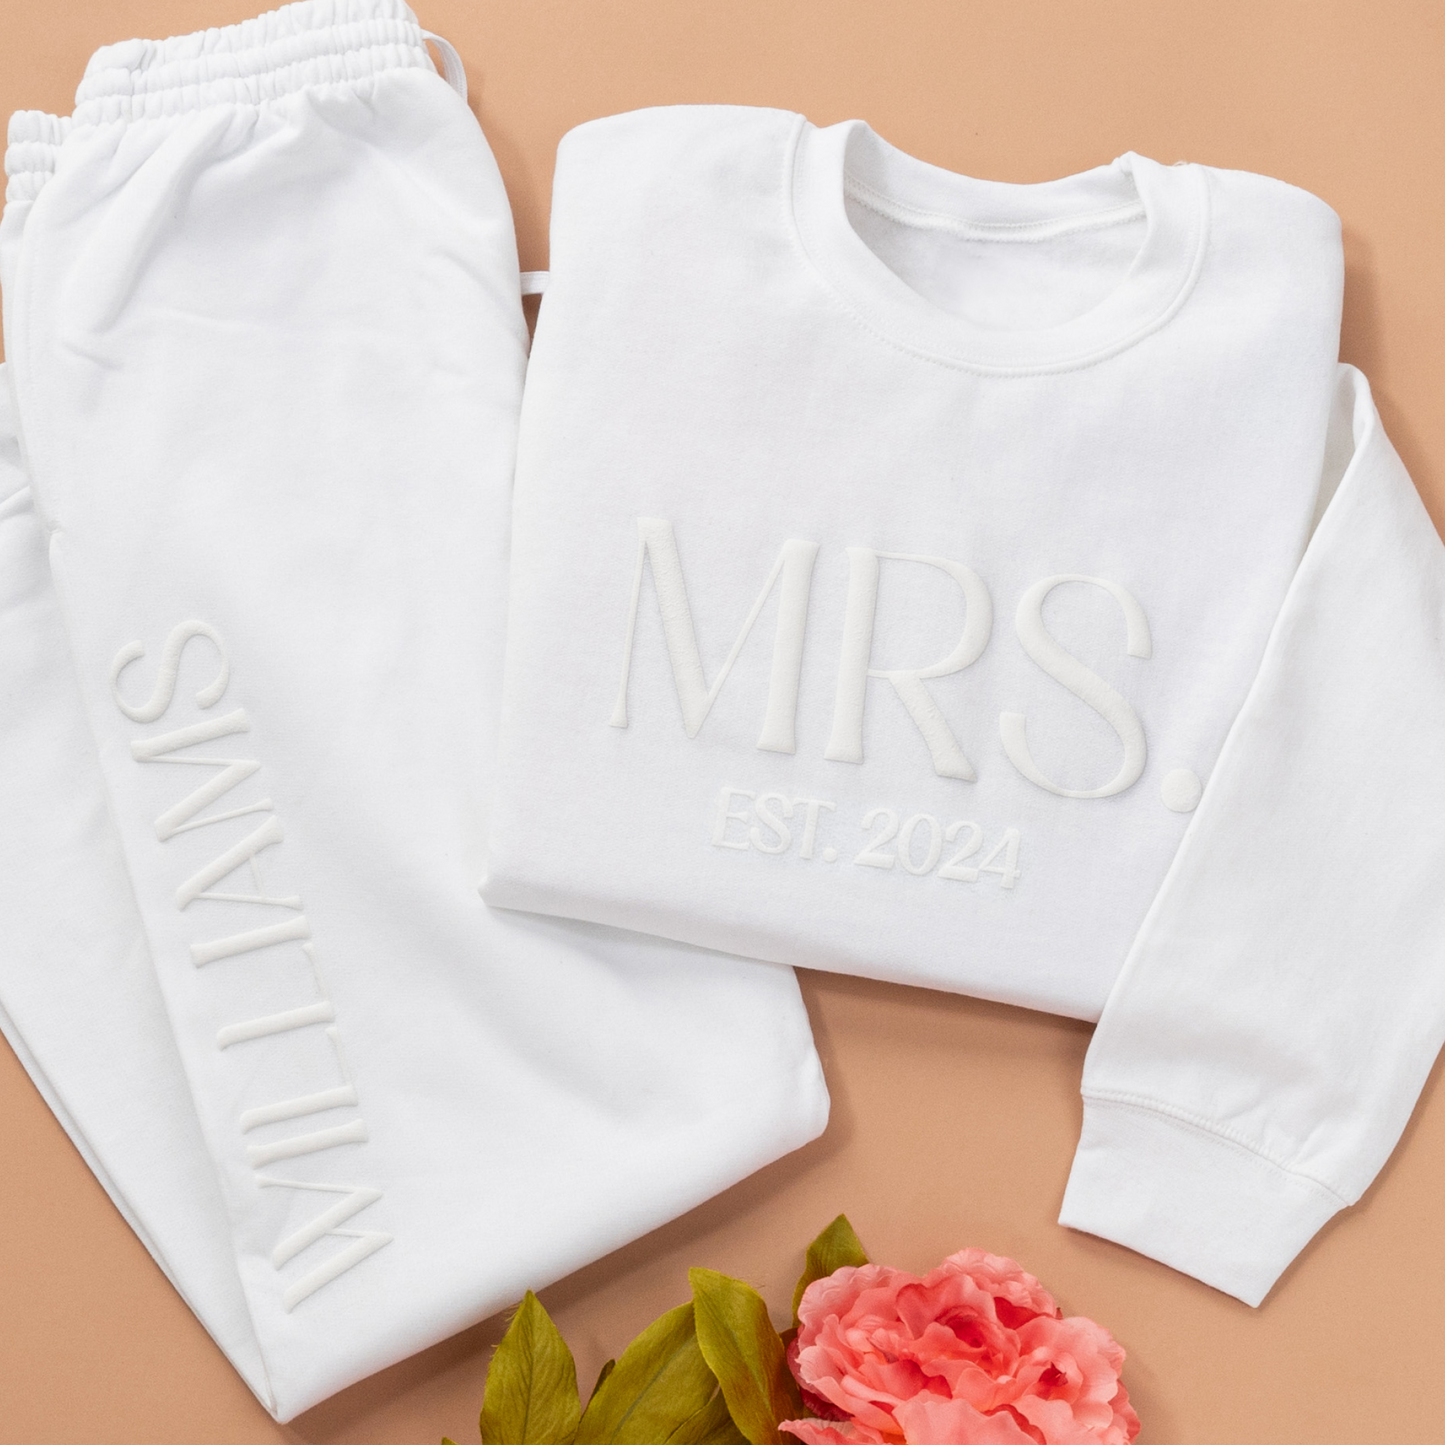 Personalized WIFEY Sweatshirt & Joggers Set